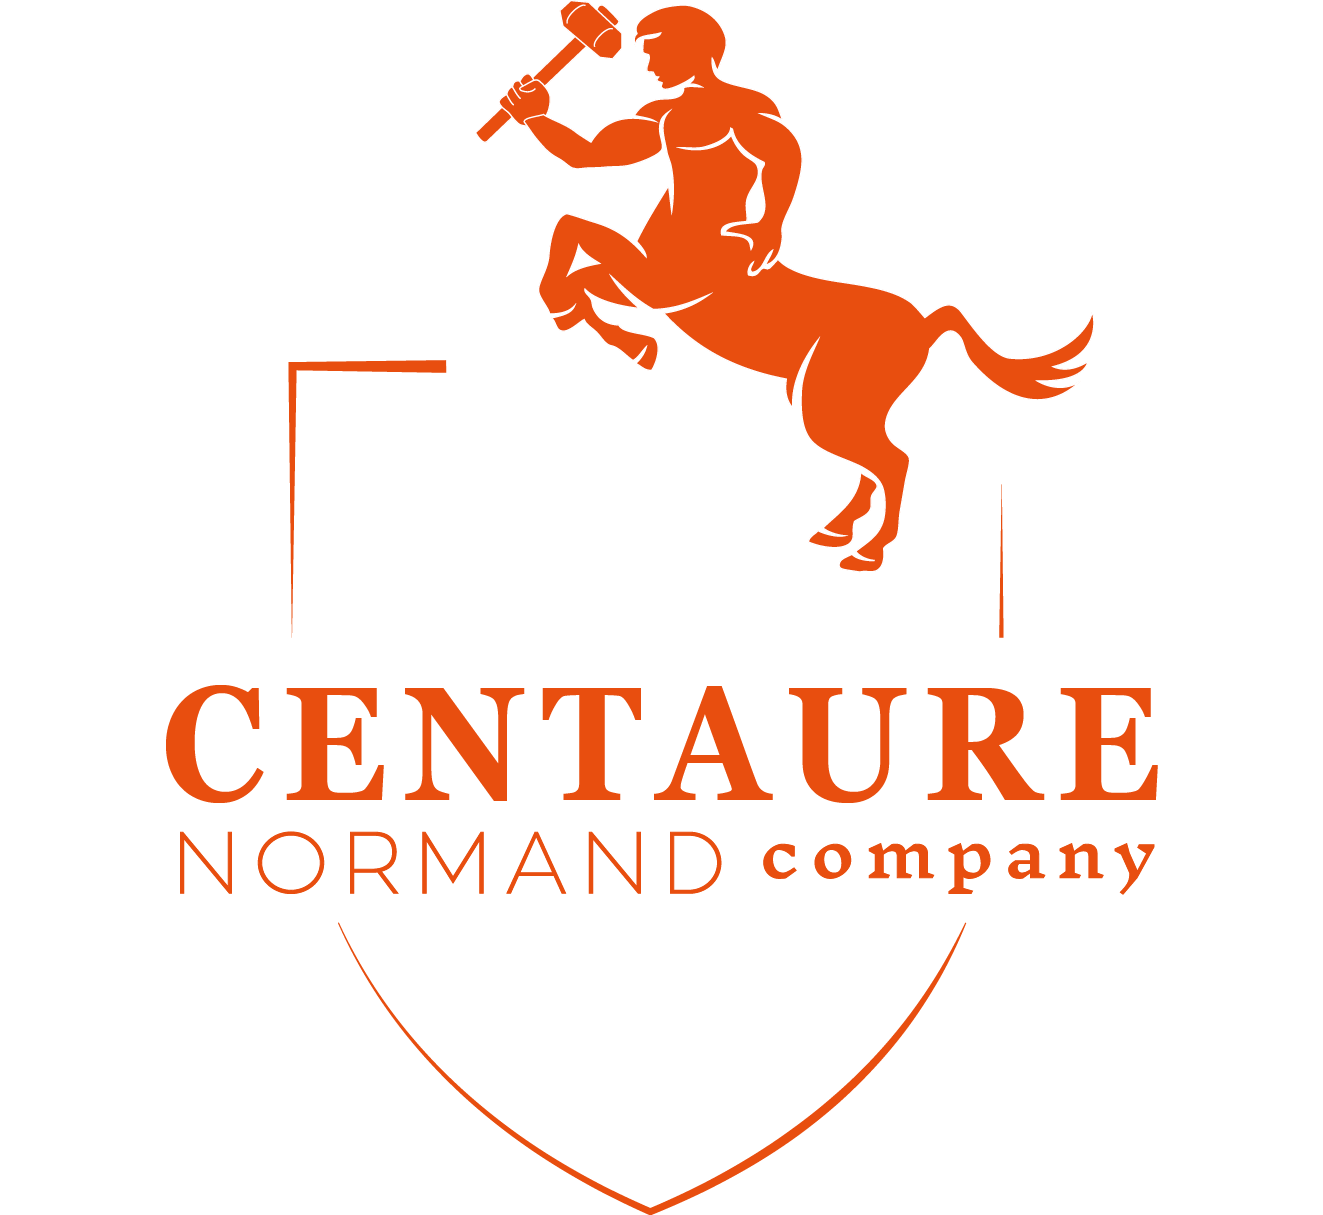 Centaure Normand Company